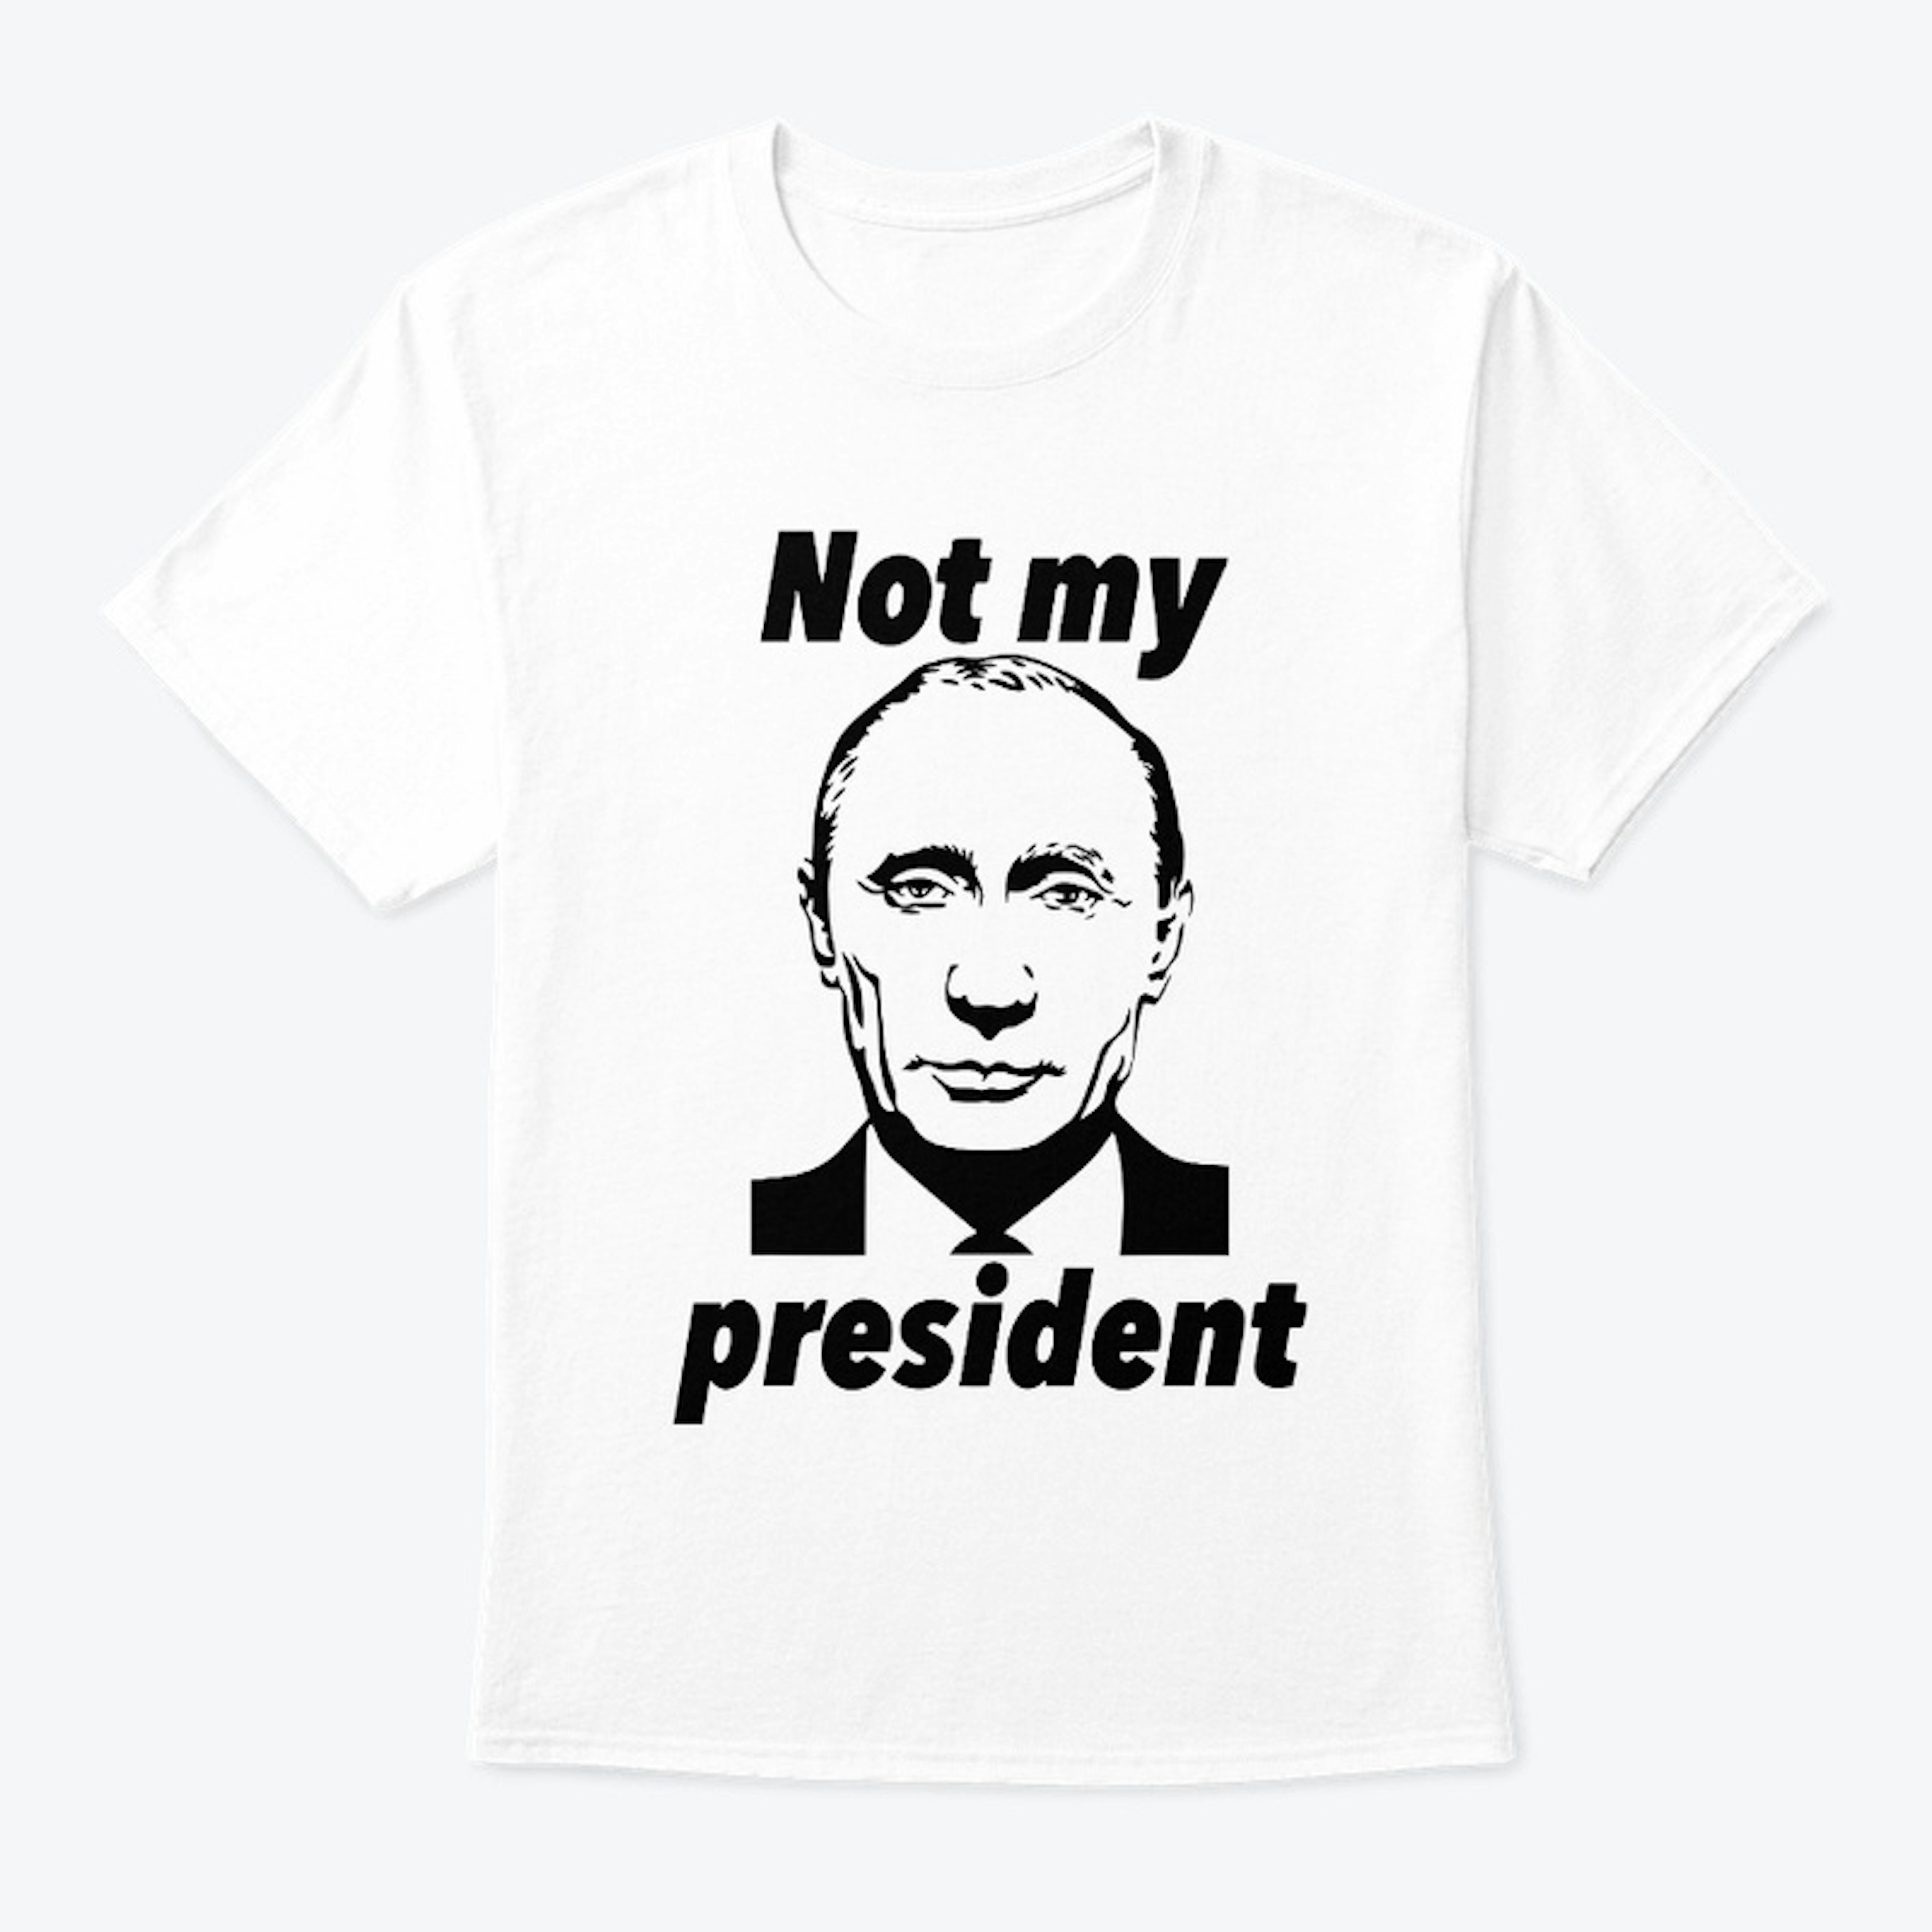 Vladimir Putin T Shirt